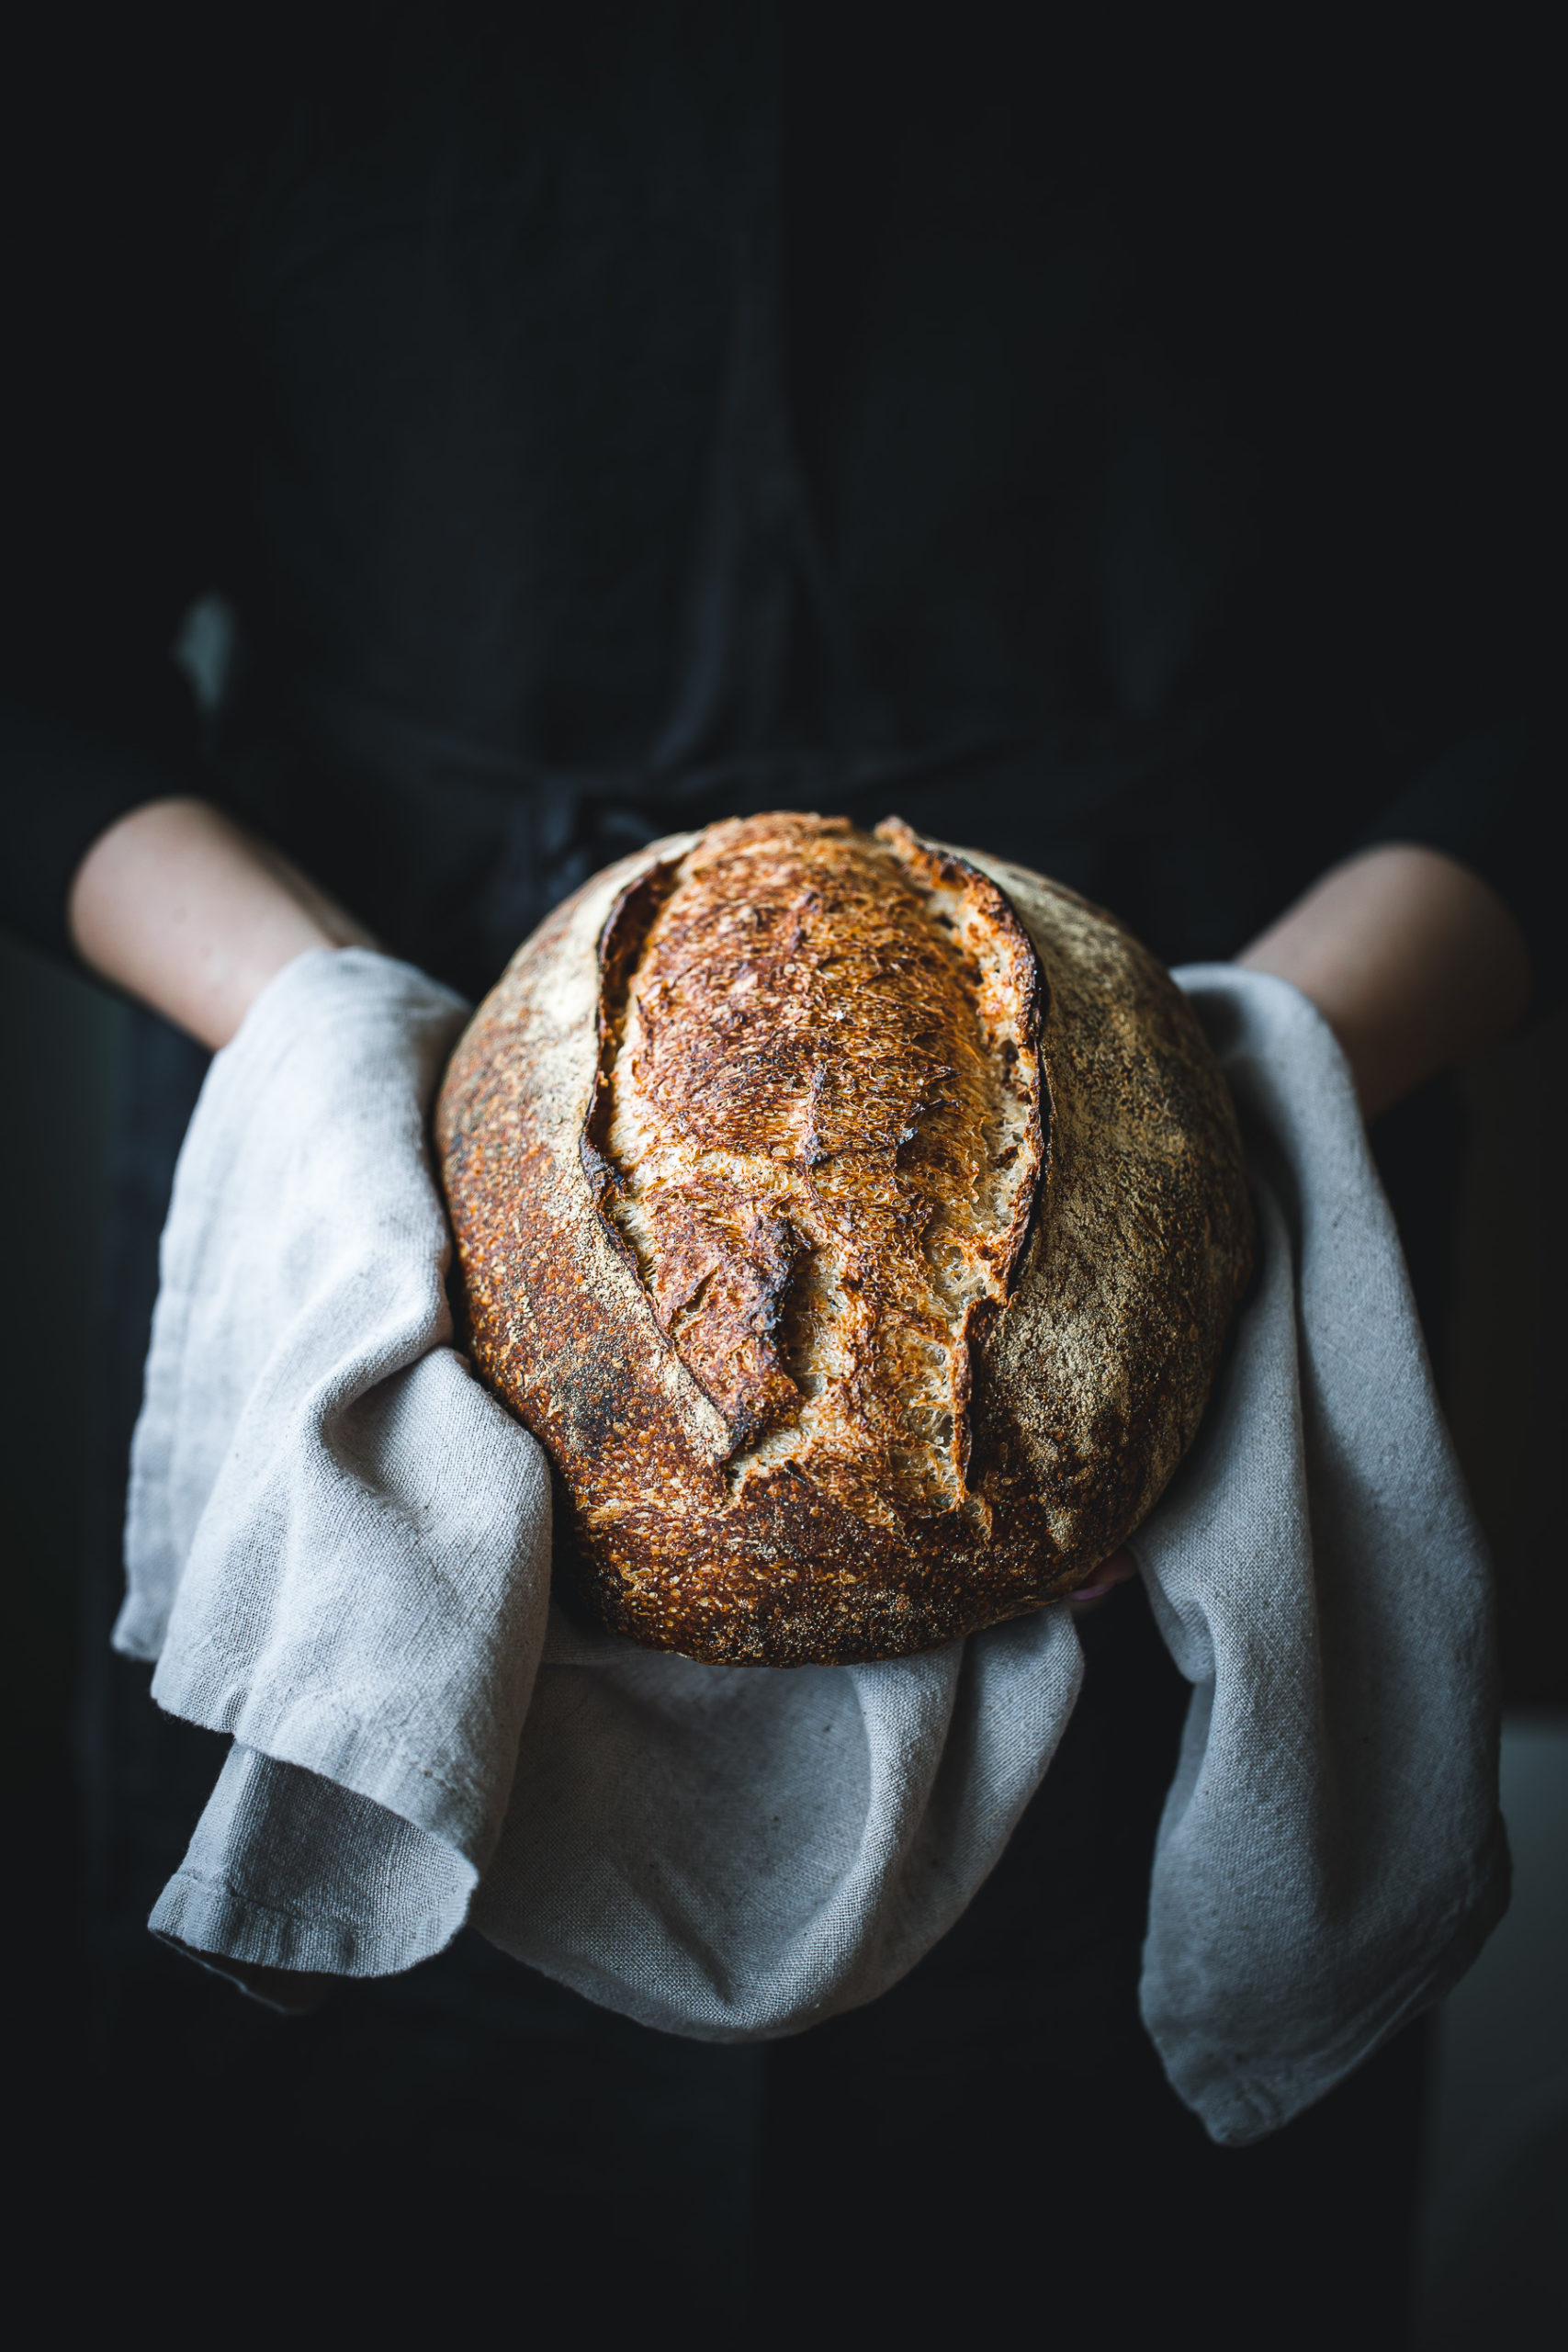 Sourdough bread photography by Zuzana Rainet, food photographer from Bratislava Slovakia